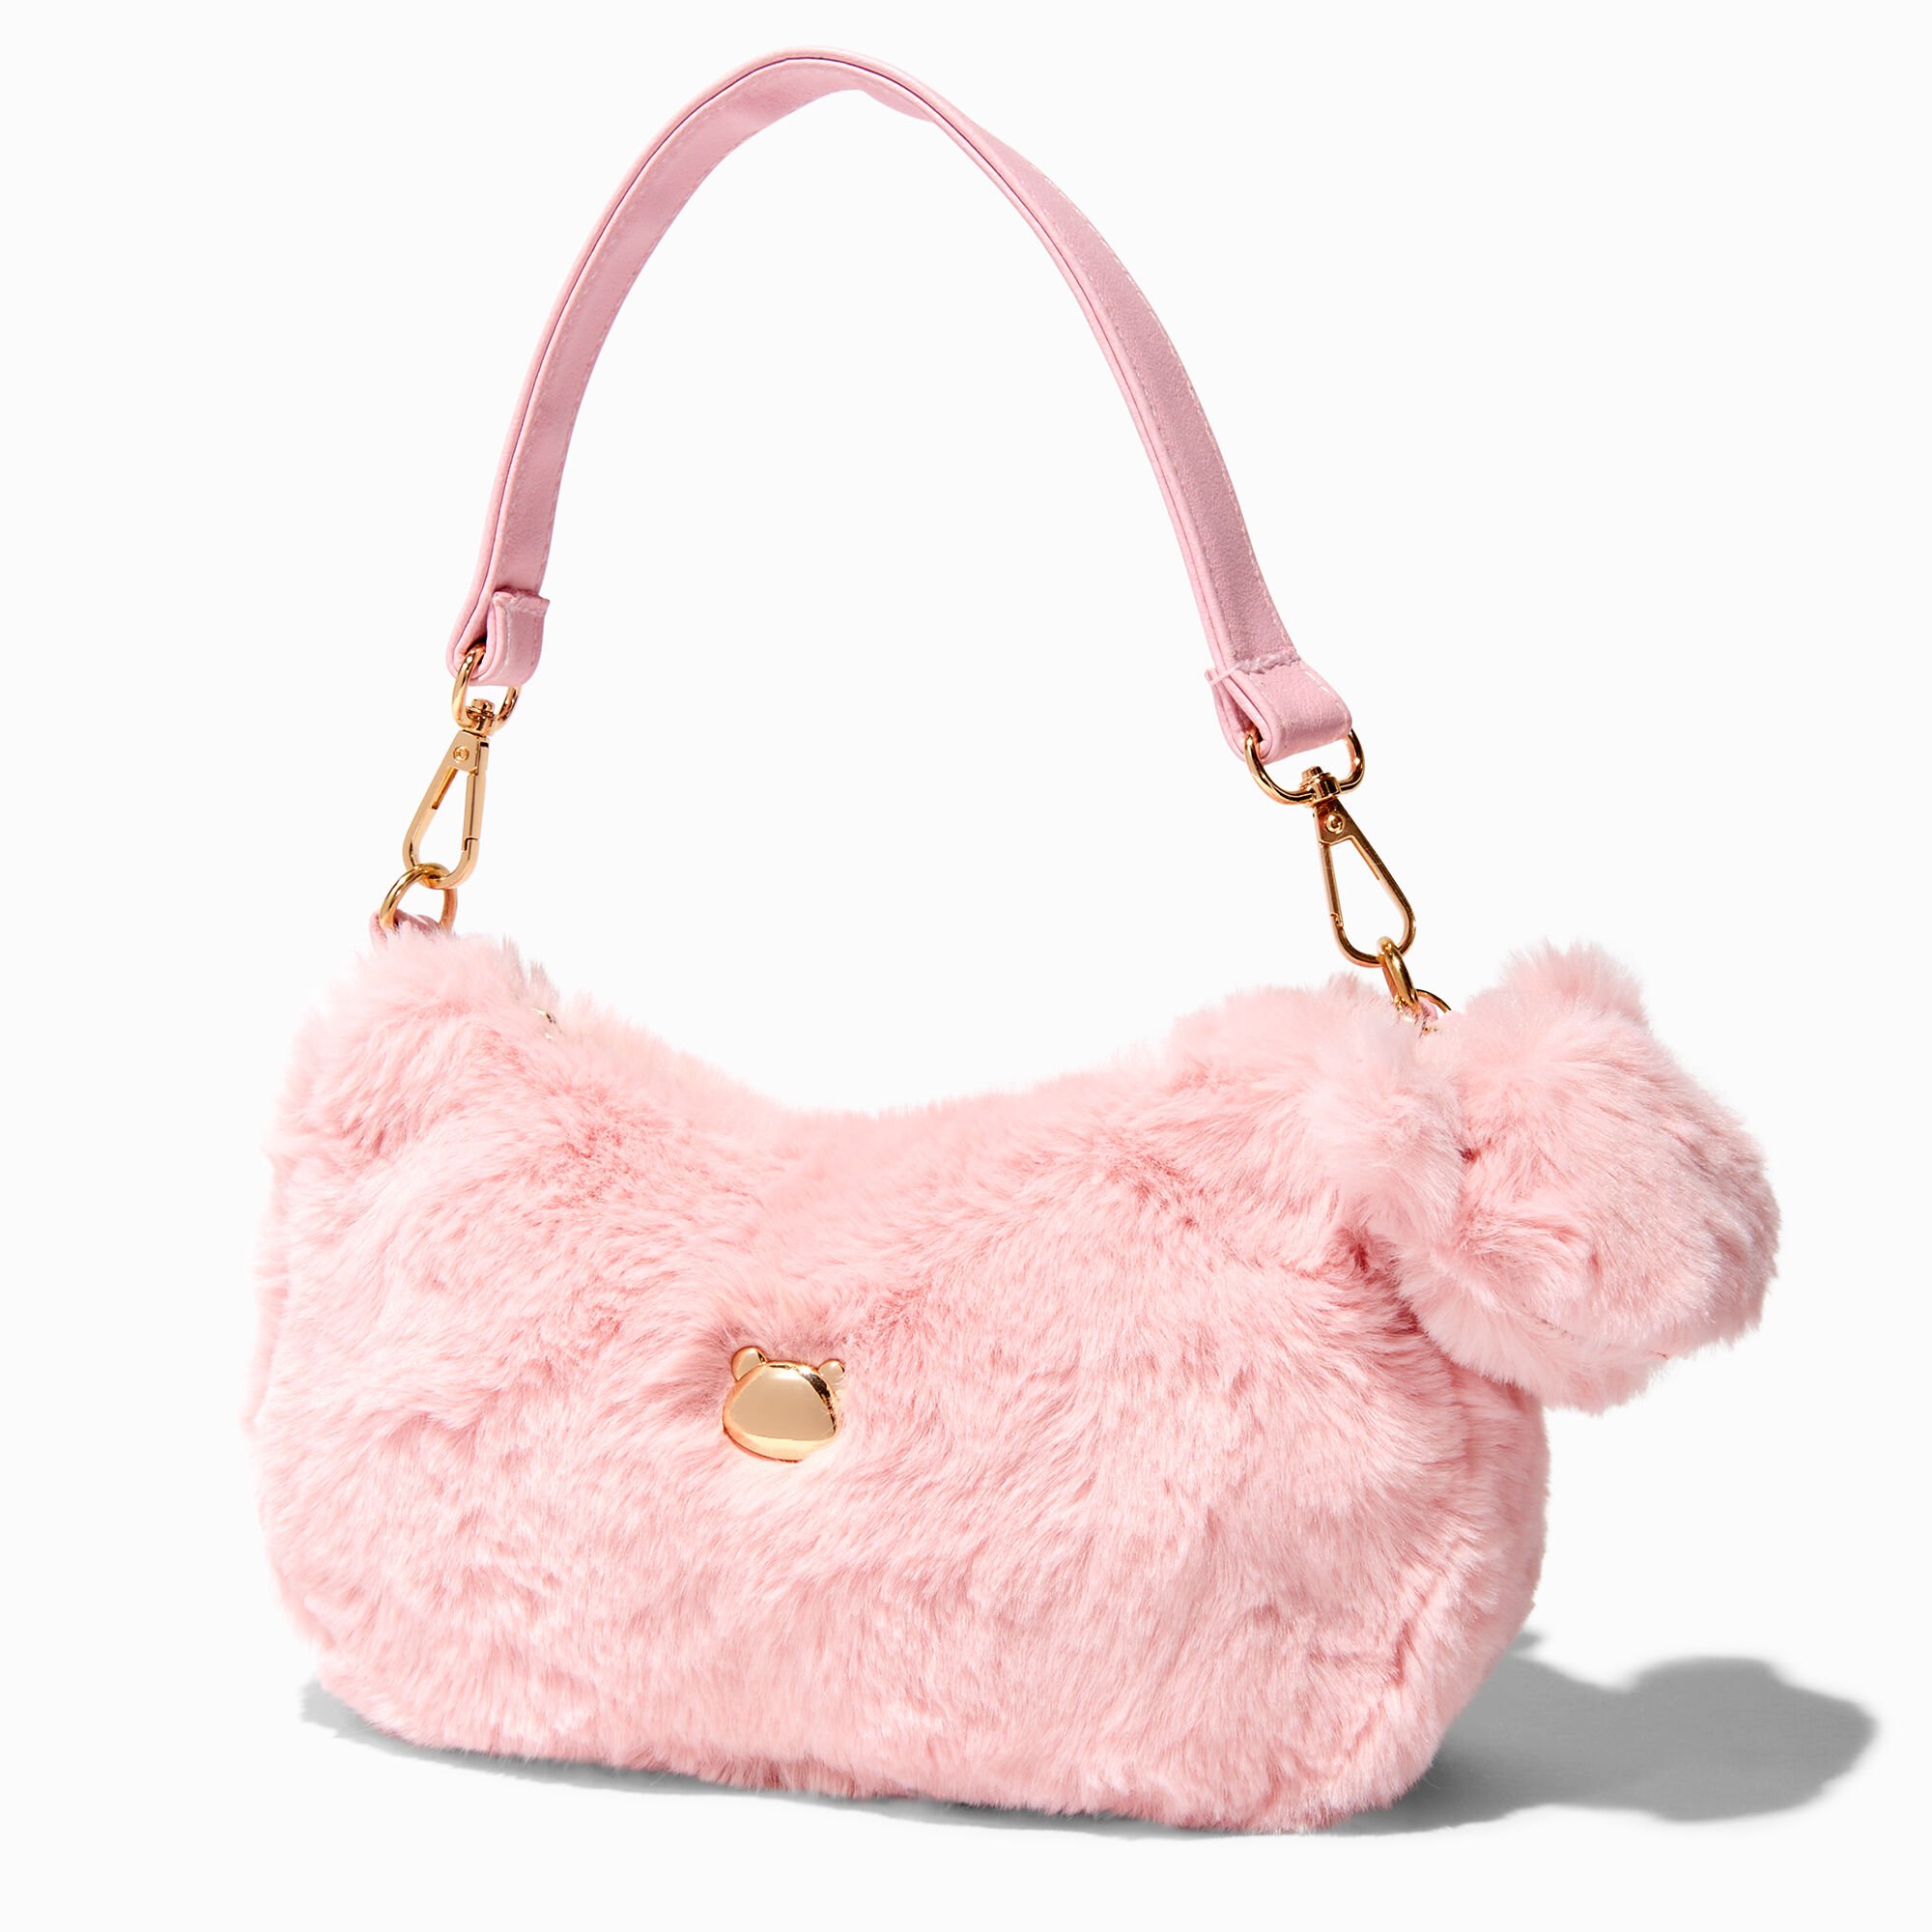 View Claires Furry Shoulder Handbag Pink information